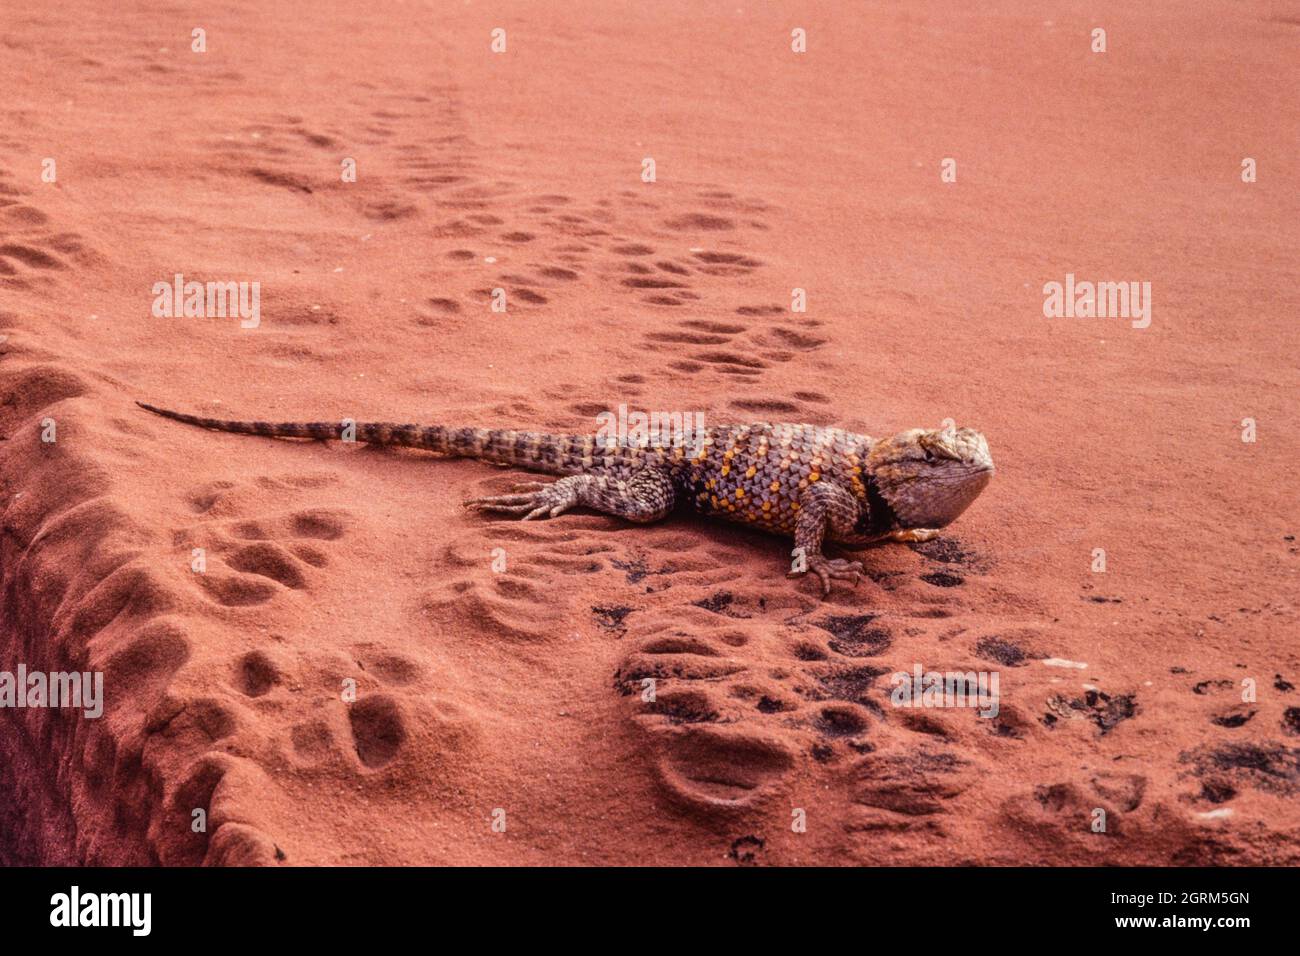 A Desert Spiny Lizard, Sceloporus magister, on an eroded sandstone slab near Lake Powell in Utah. Stock Photo